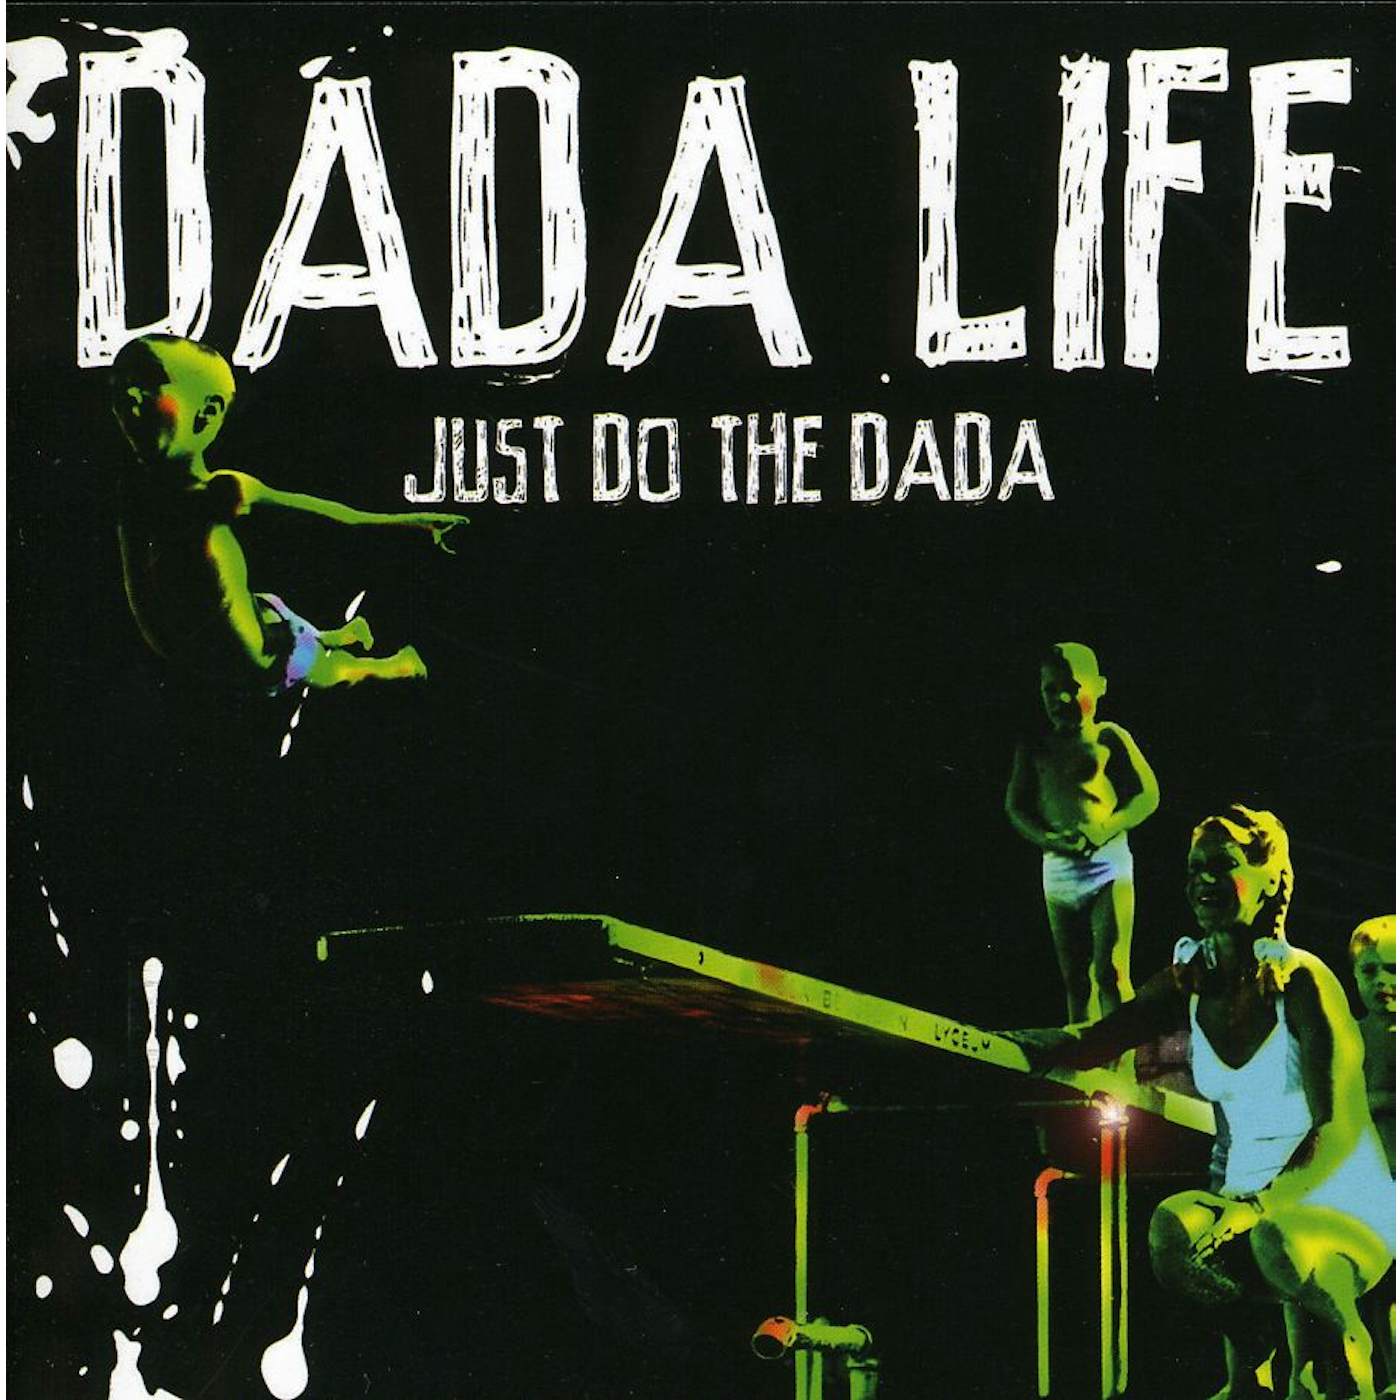 Dada Life JUST DO THE DADA CD